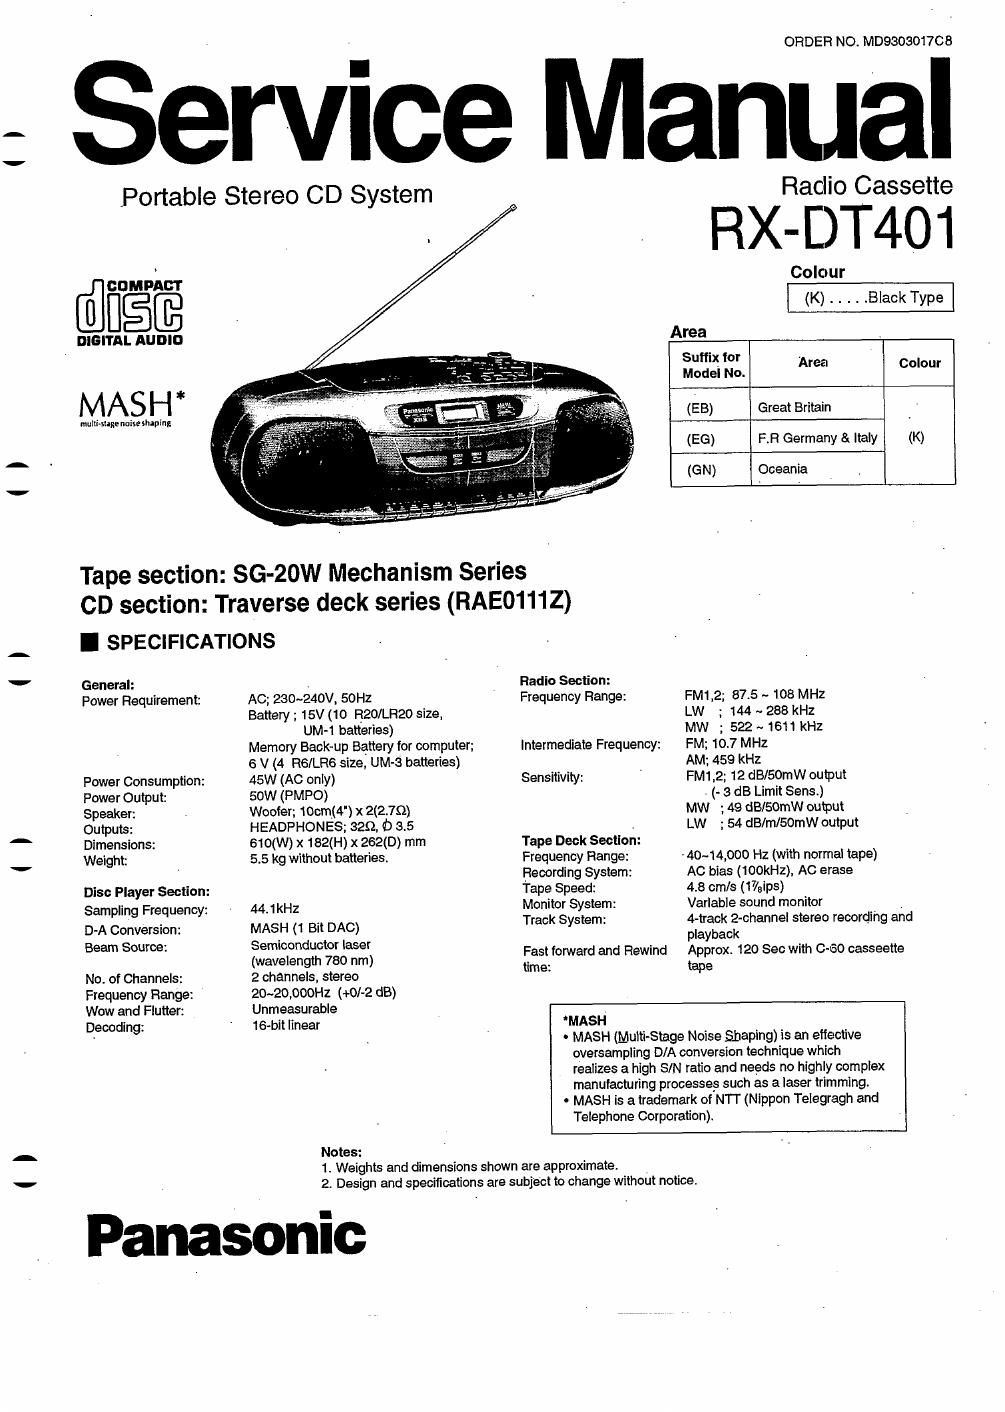 panasonic rx dt 401 service manual